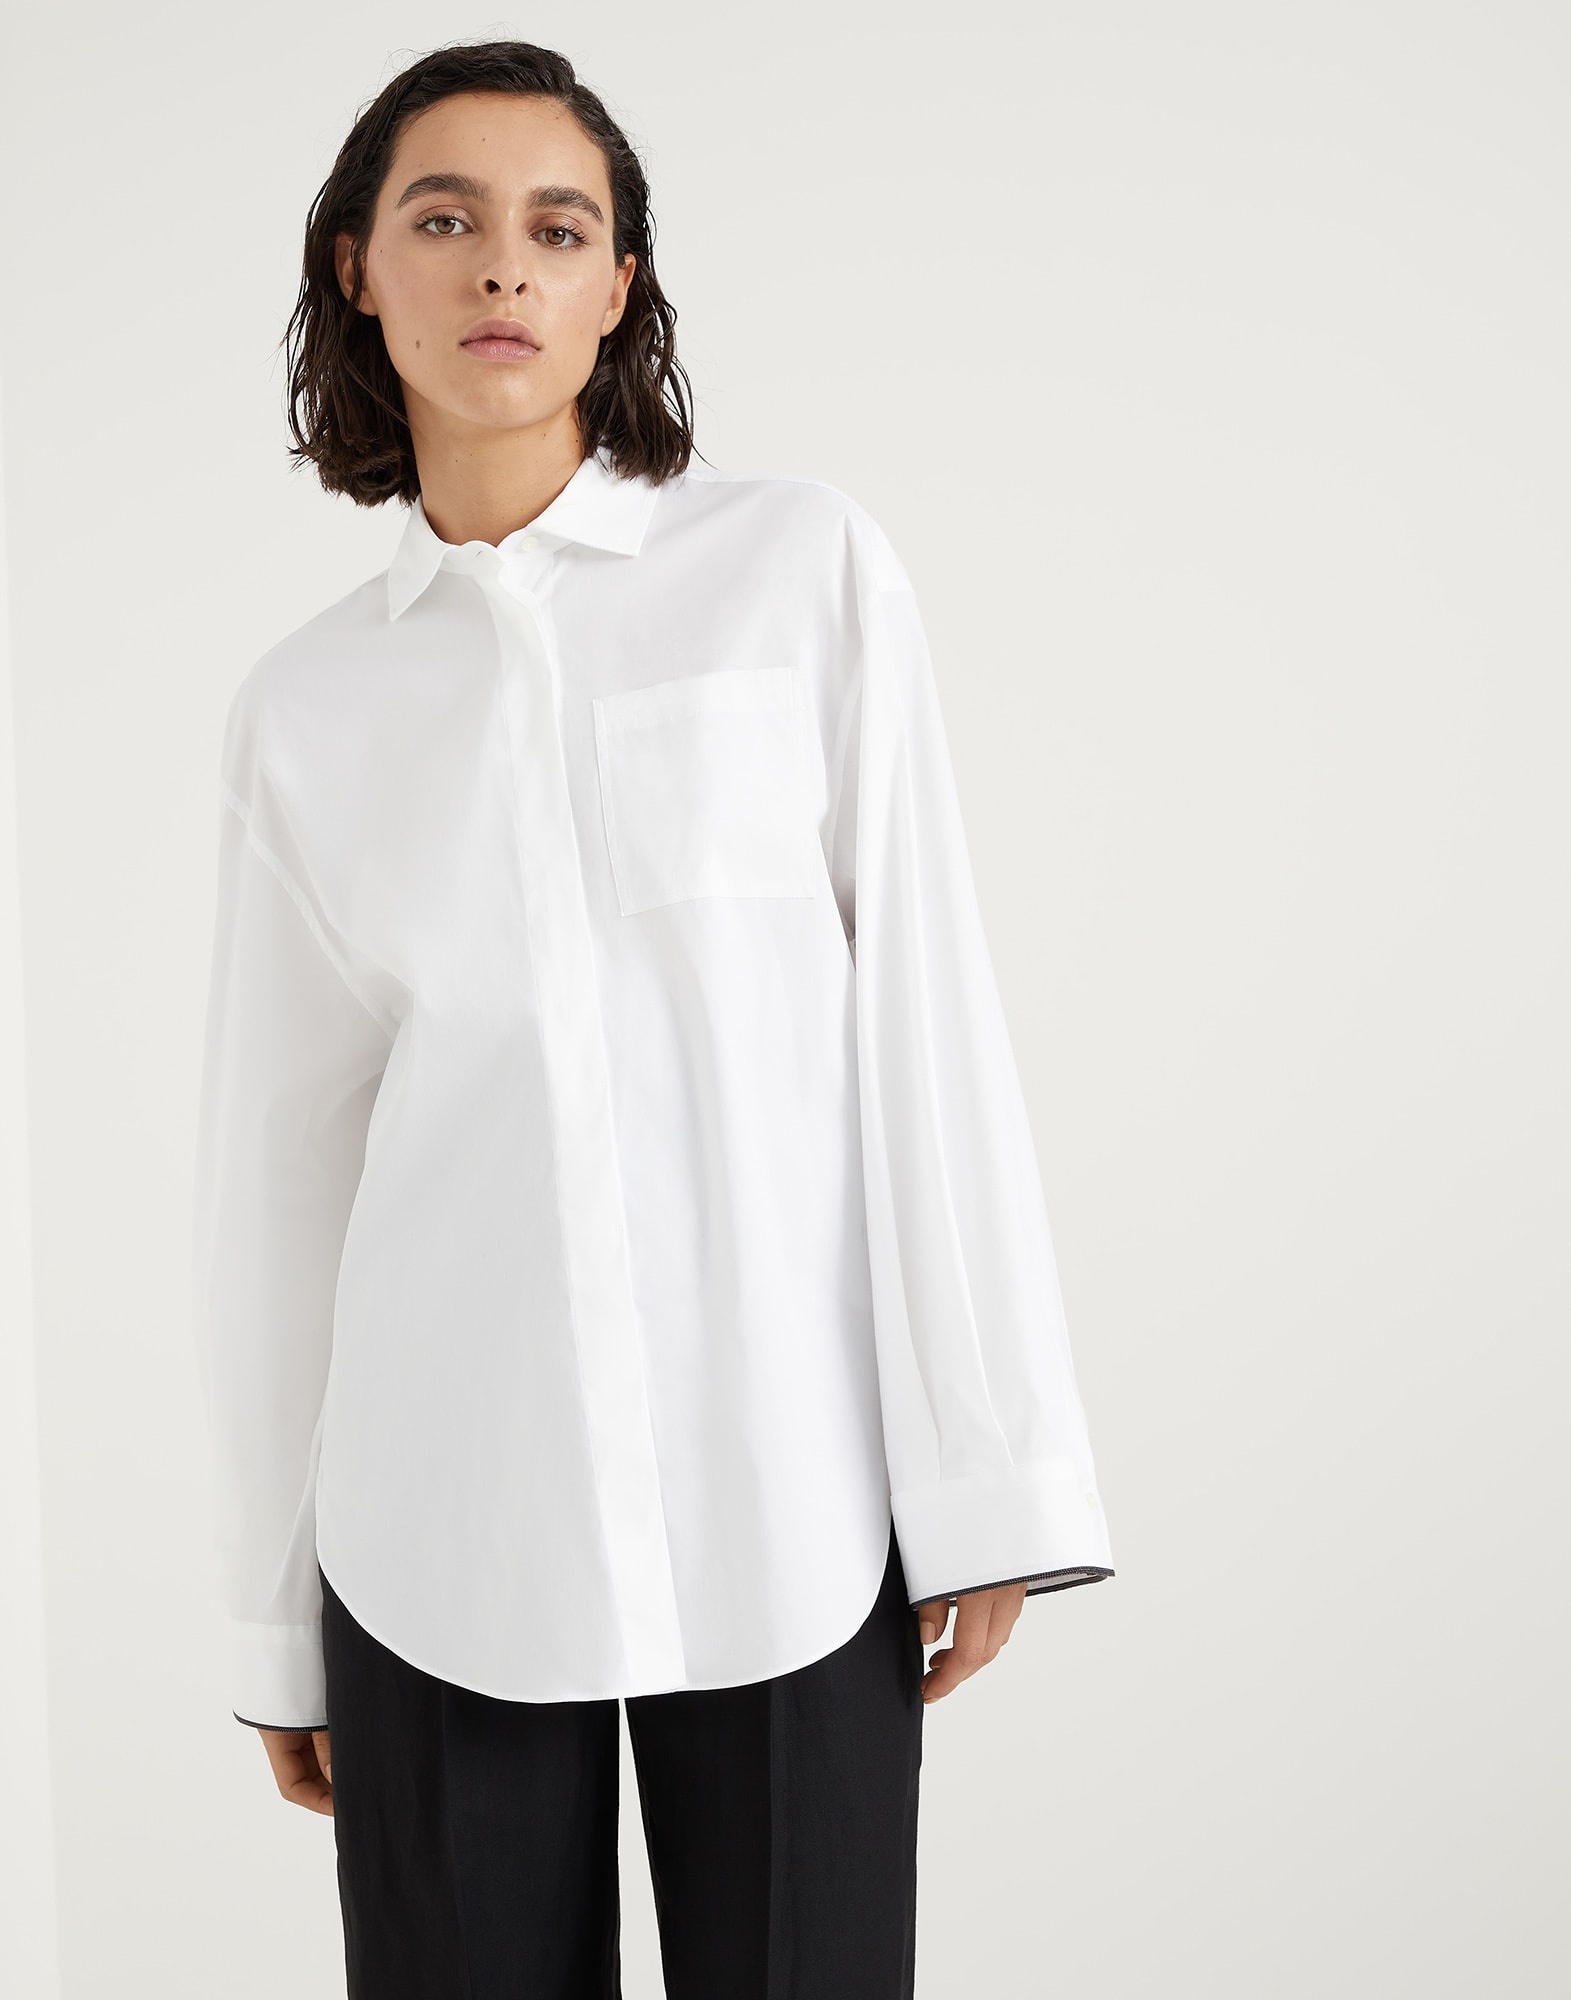 Stretch cotton poplin shirt with shiny cuff details - 1